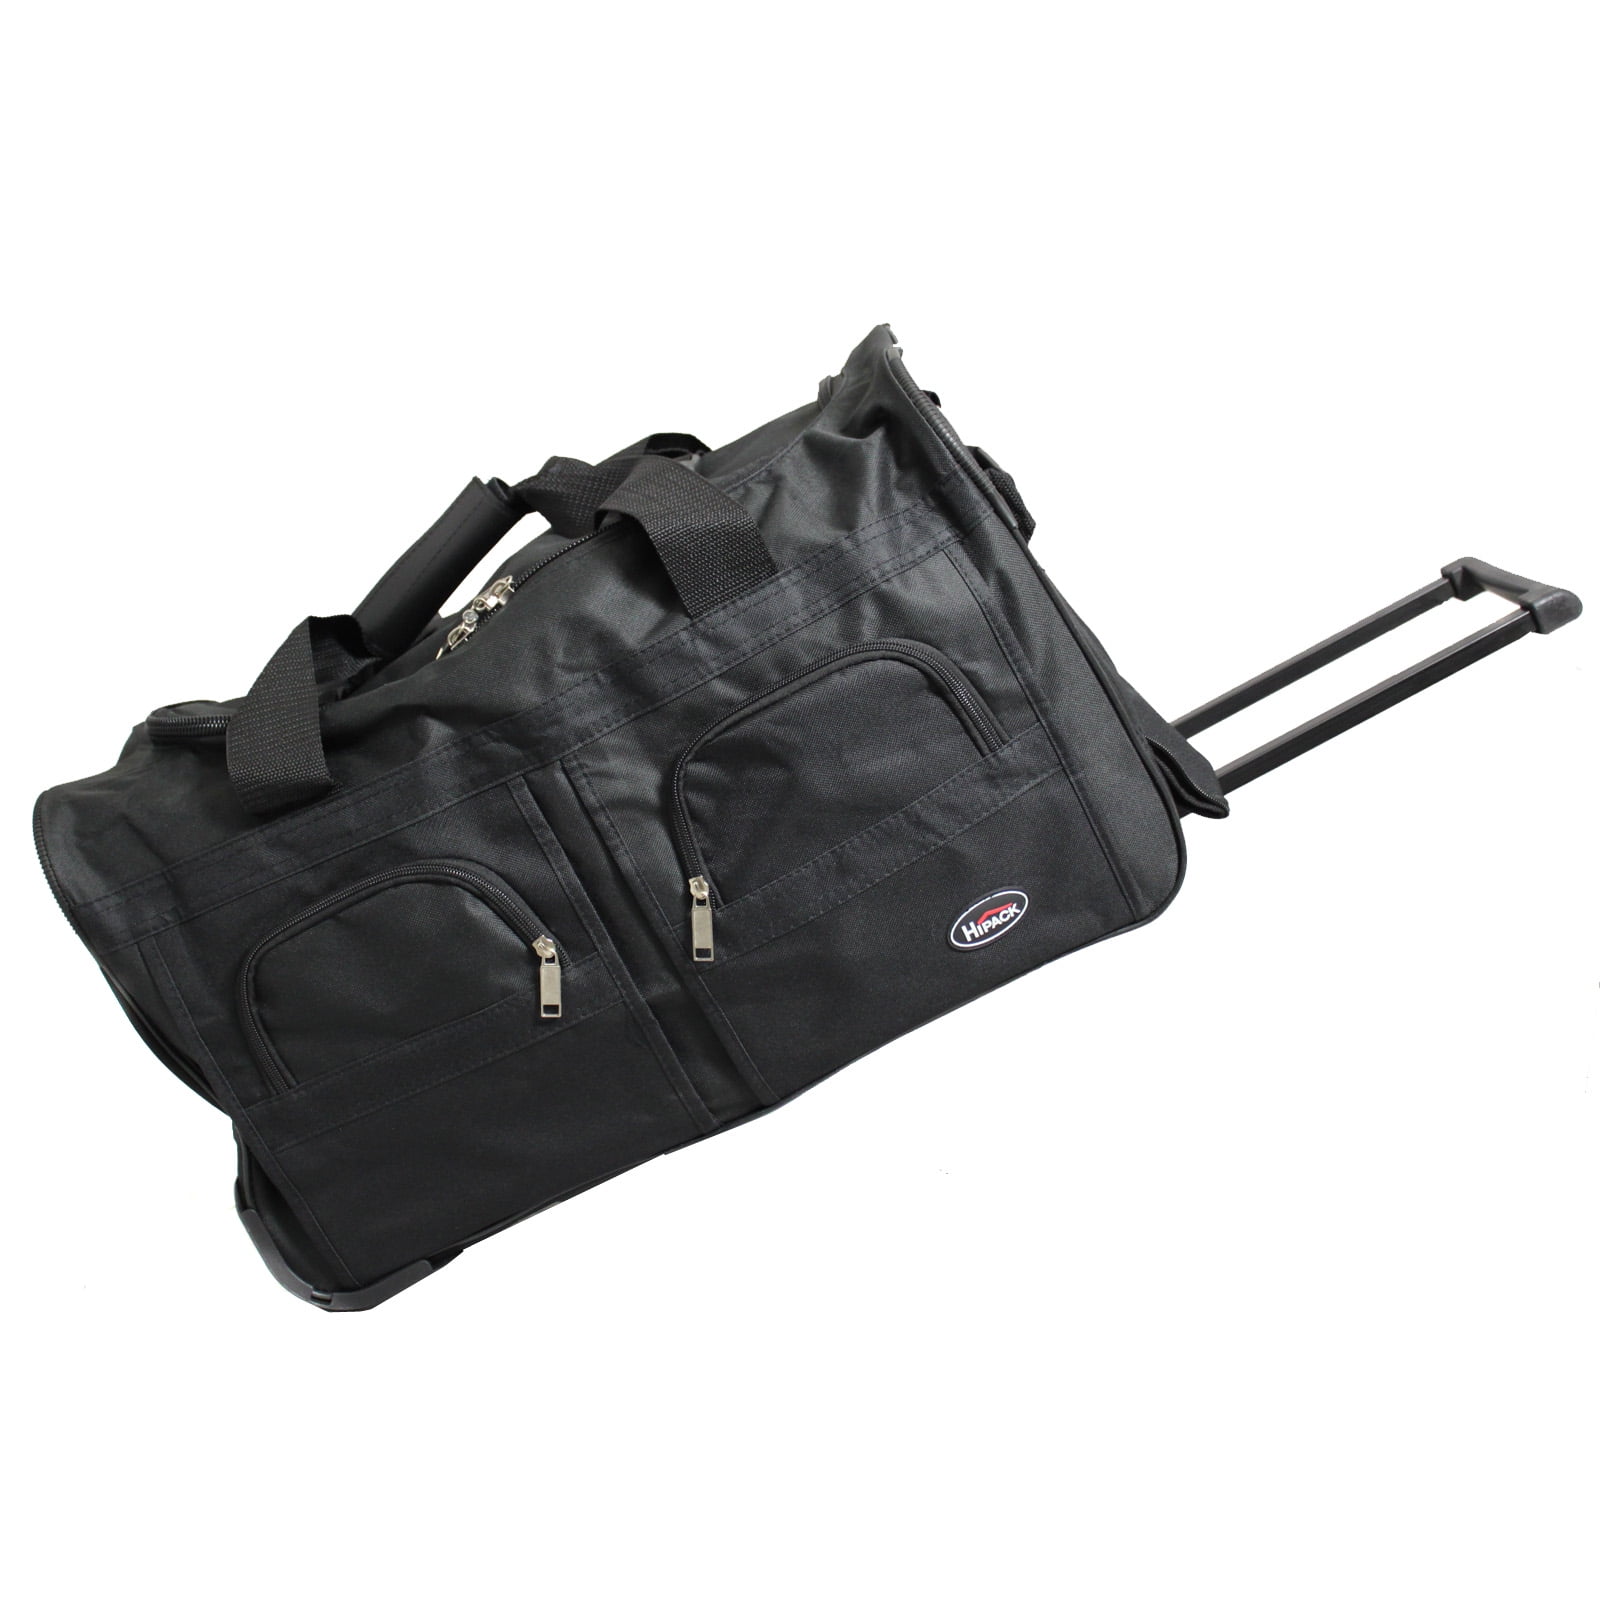 Denco 22-inch Wheeled Duffel Bag Large Black 